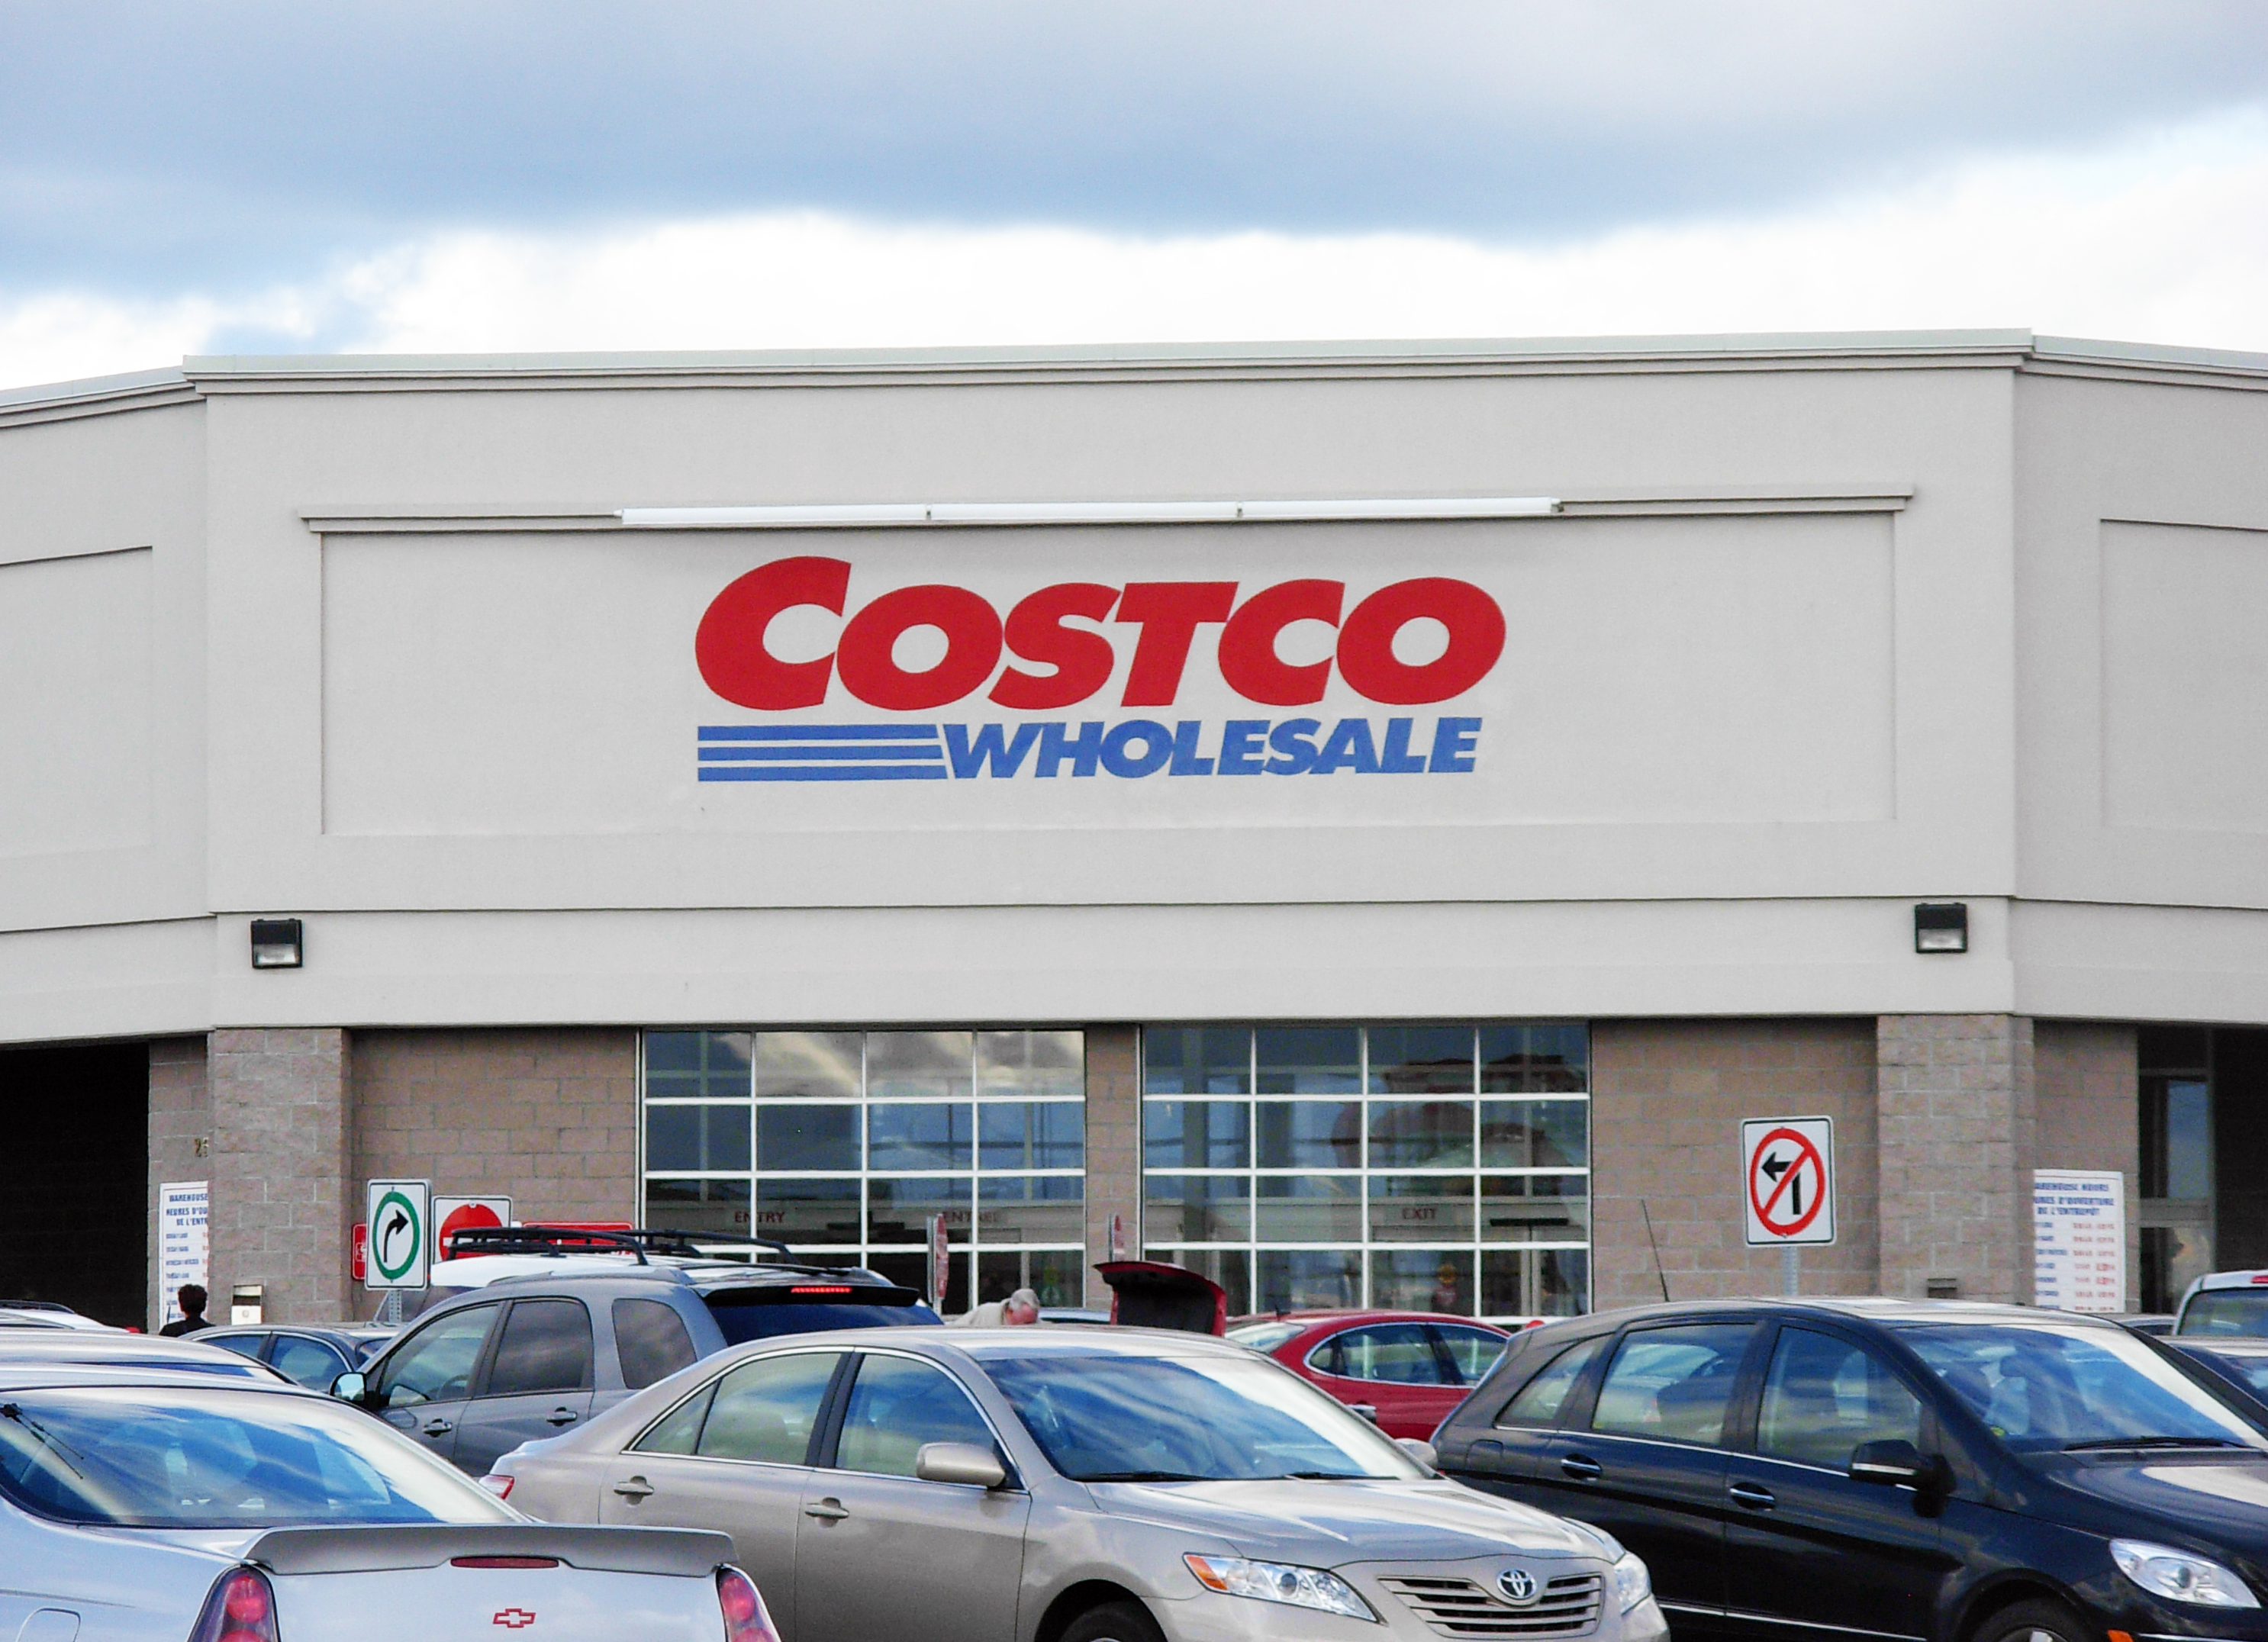 Costco Development Getting Closer to Breaking Ground